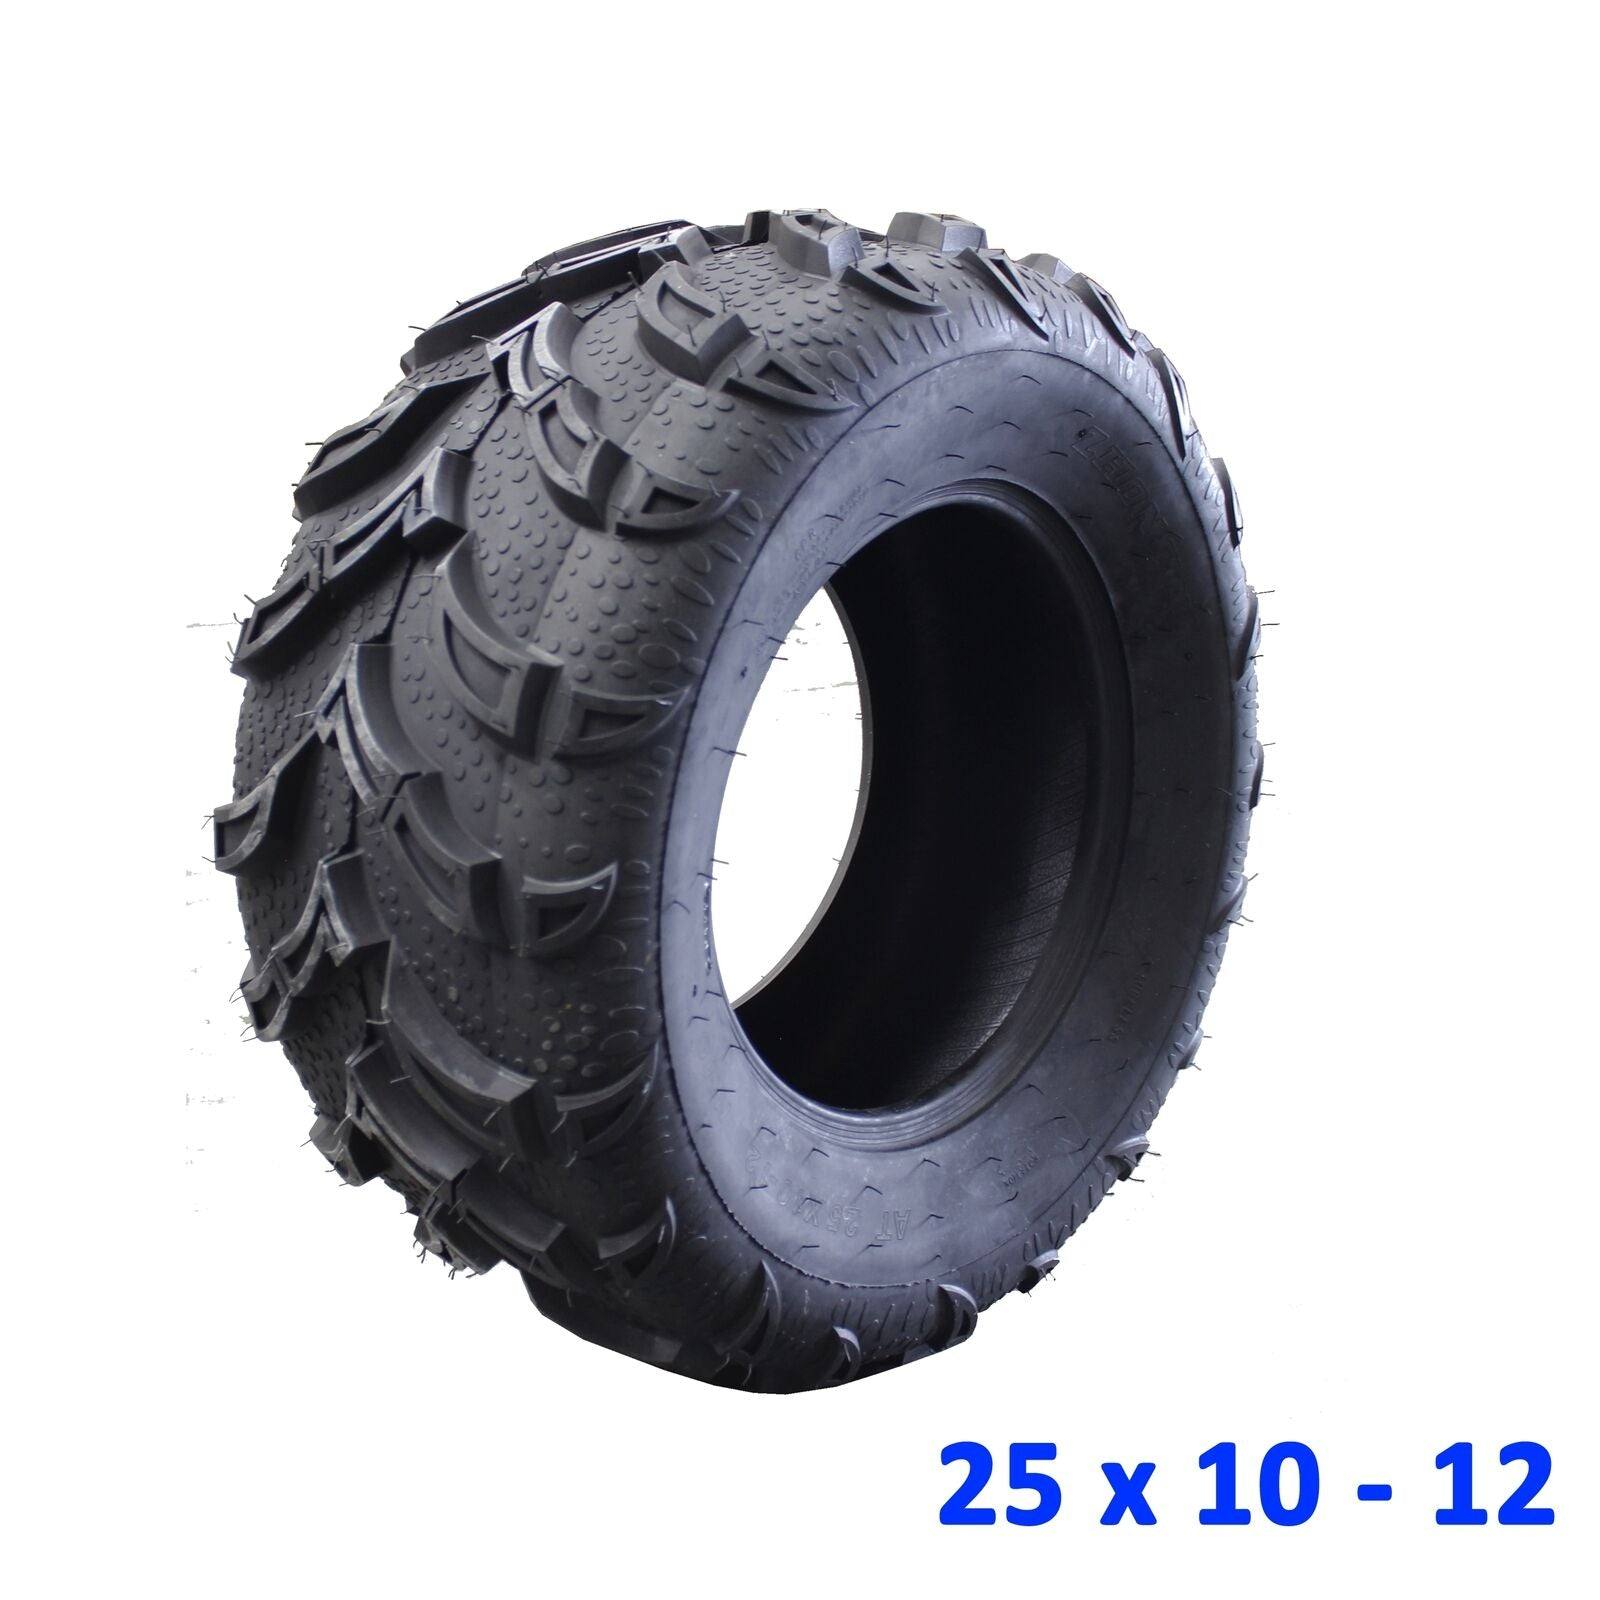 2pcs 25x8-12" & 2pcs 25x10-12" Tyres 6ply For Off Road Quad ATV Farm Dirt Bike - TDRMOTO